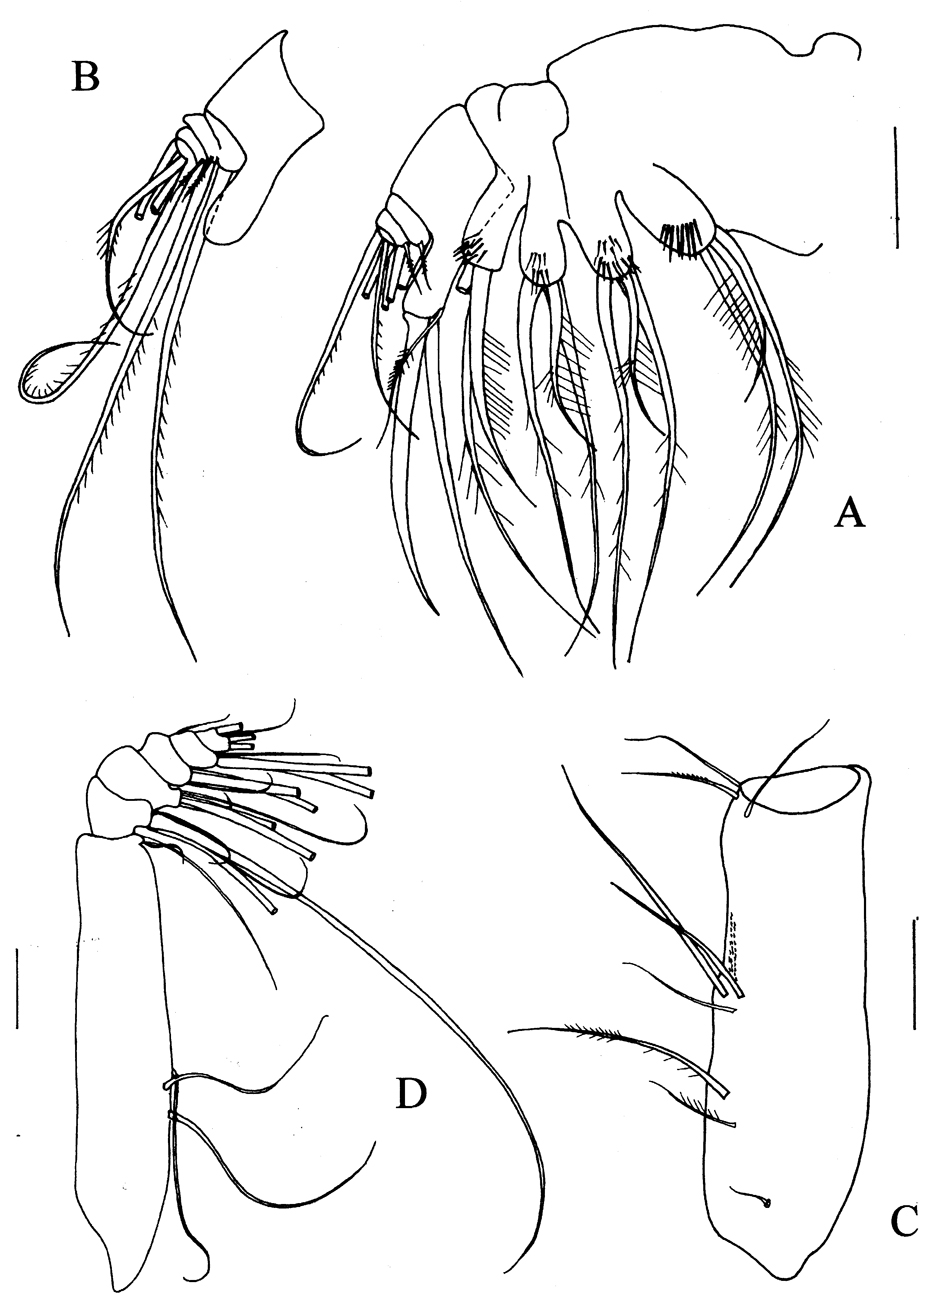 Species Prolutamator hadalis - Plate 3 of morphological figures